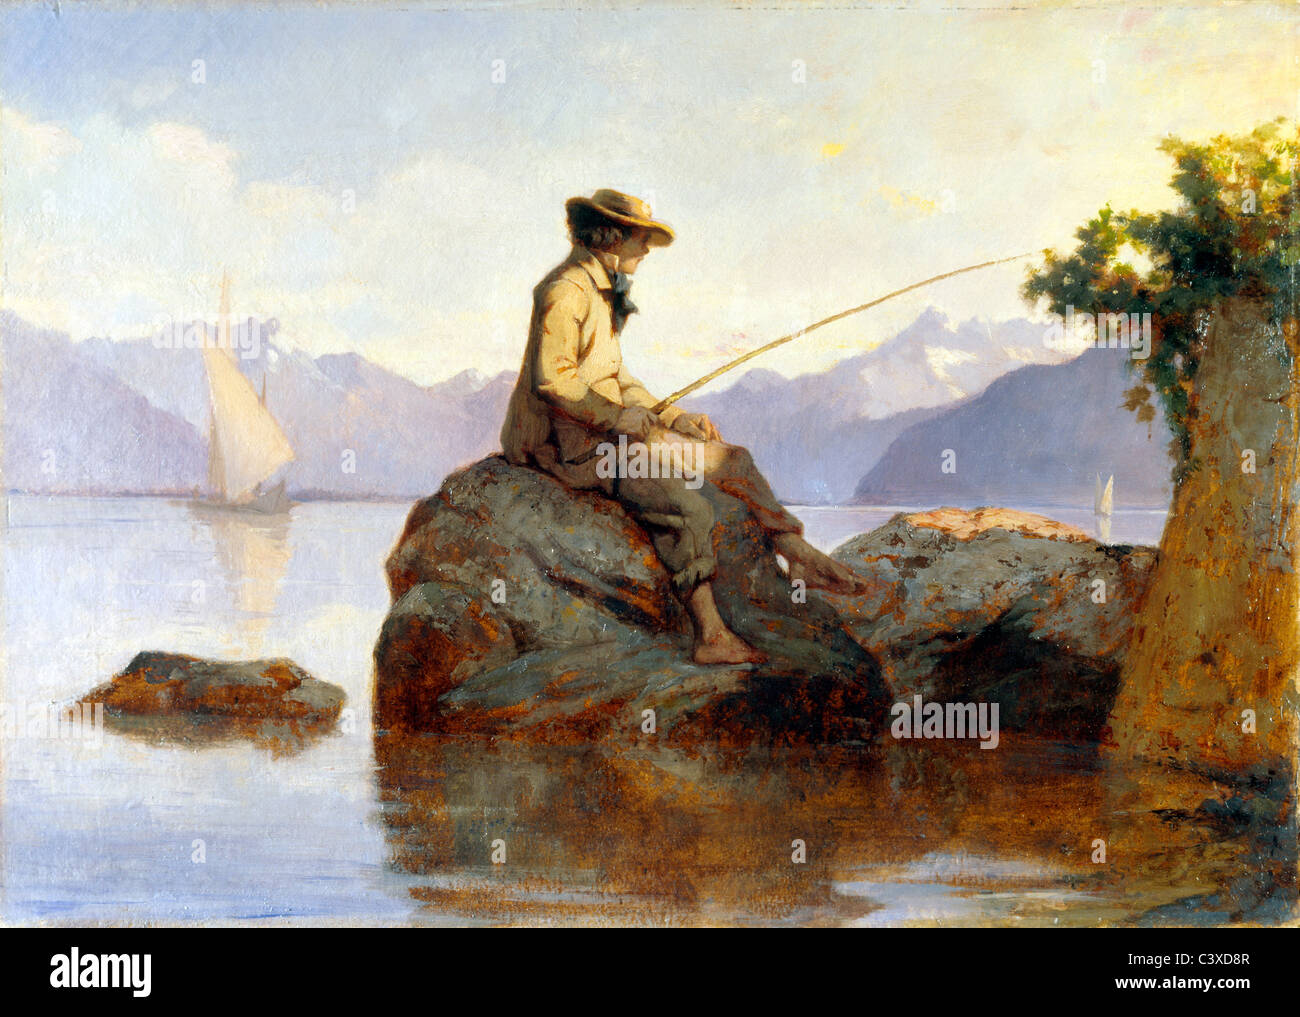 Pintura al óleo de un hombre pesca, por Louis David Bocion Franþois. Suiza, del siglo XIX. Foto de stock